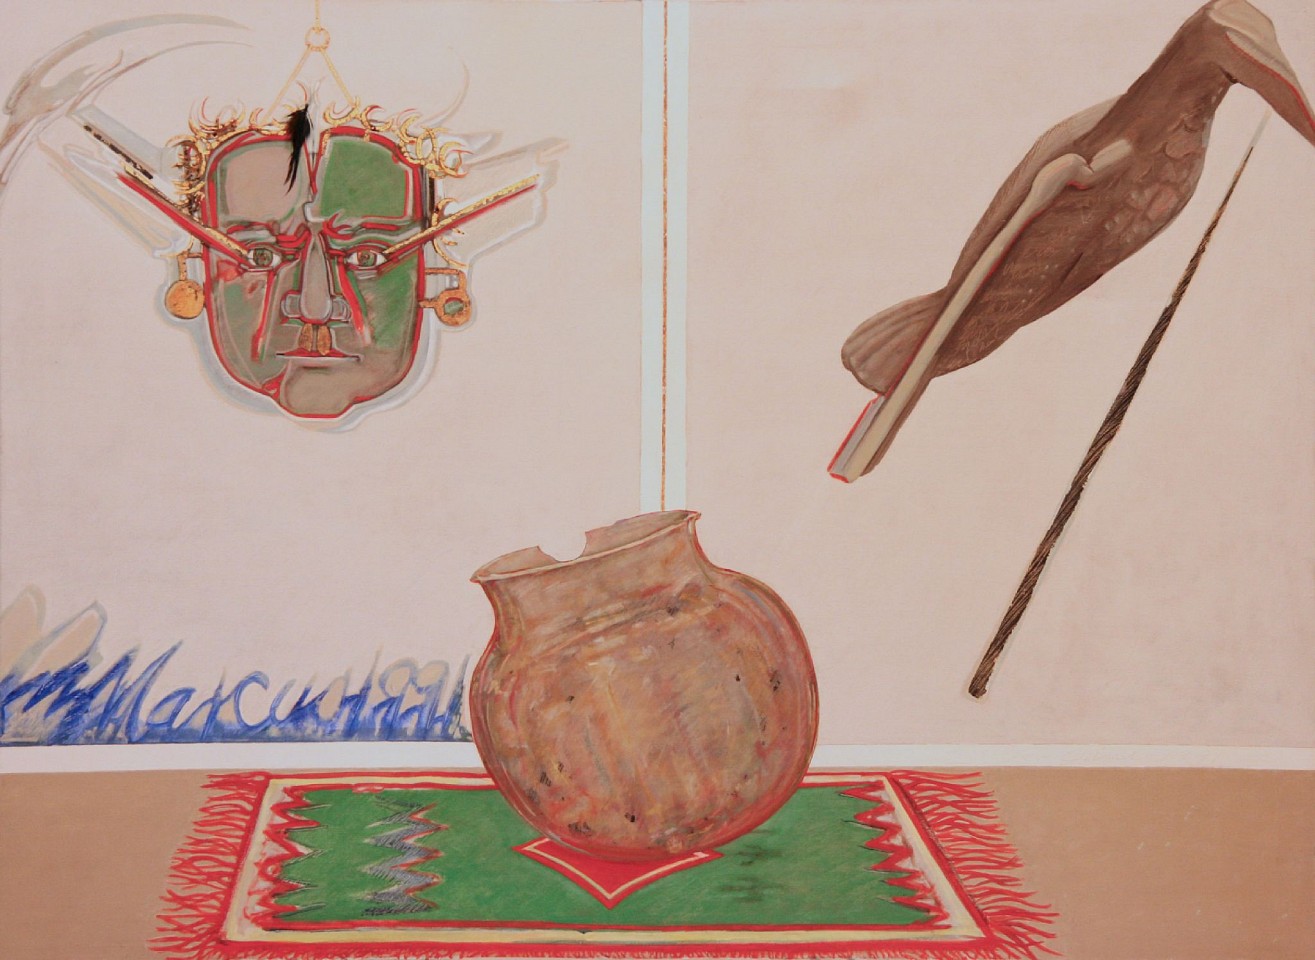 Marcia Marcus
Threnody, 1991
oil on linen, 35 x 48 in.